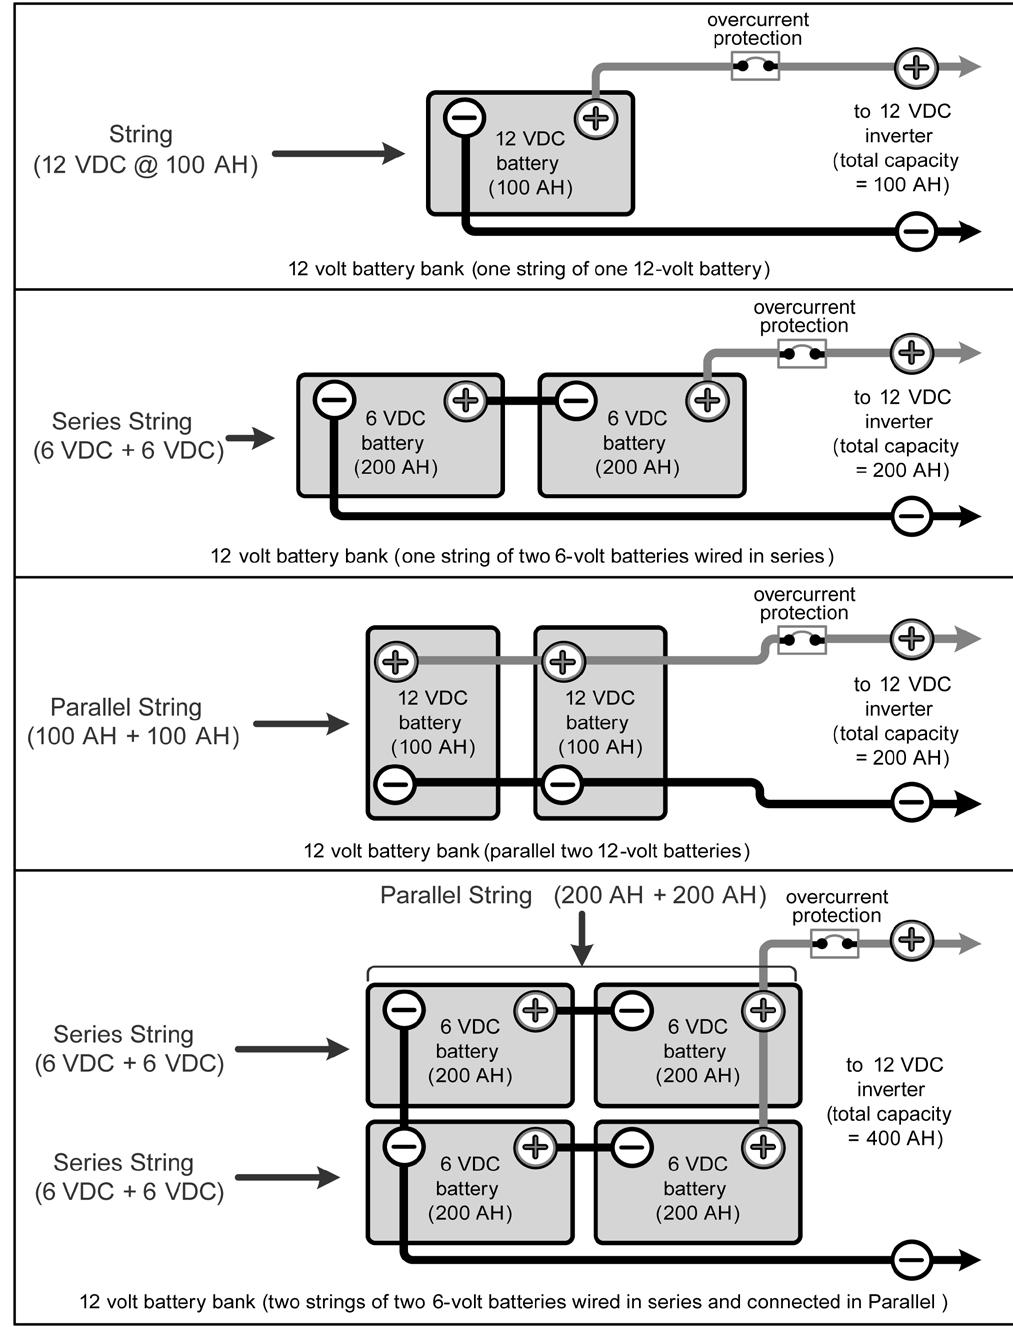 Appendix B - Battery Information to 12 VDC inverter (total capacity = 100 AH) 12 volt battery bank (one string of one 12-volt battery) to 12 VDC inverter (total capacity = 200 AH) 12 volt battery